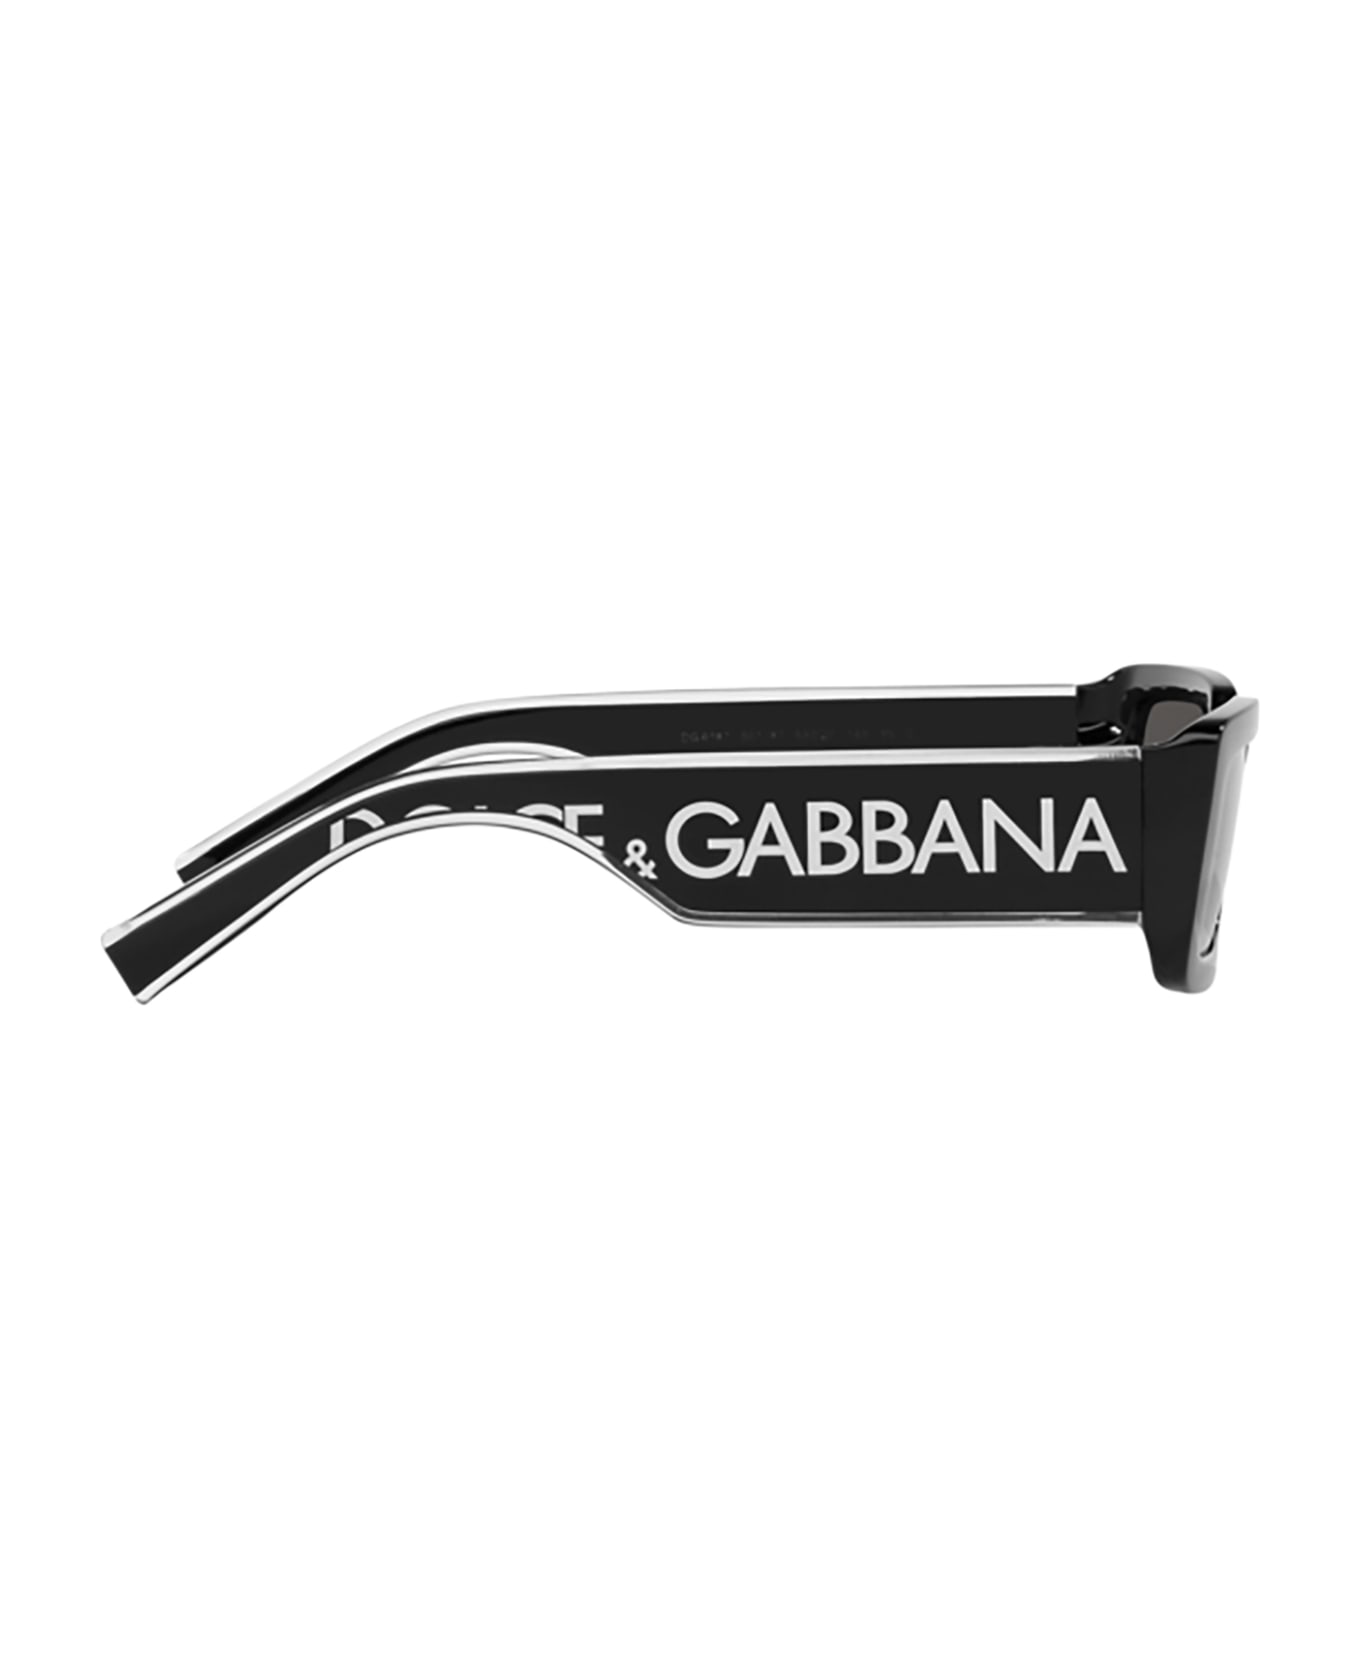 Dolce & Gabbana Eyewear Dg6187 Black Sunglasses - Black